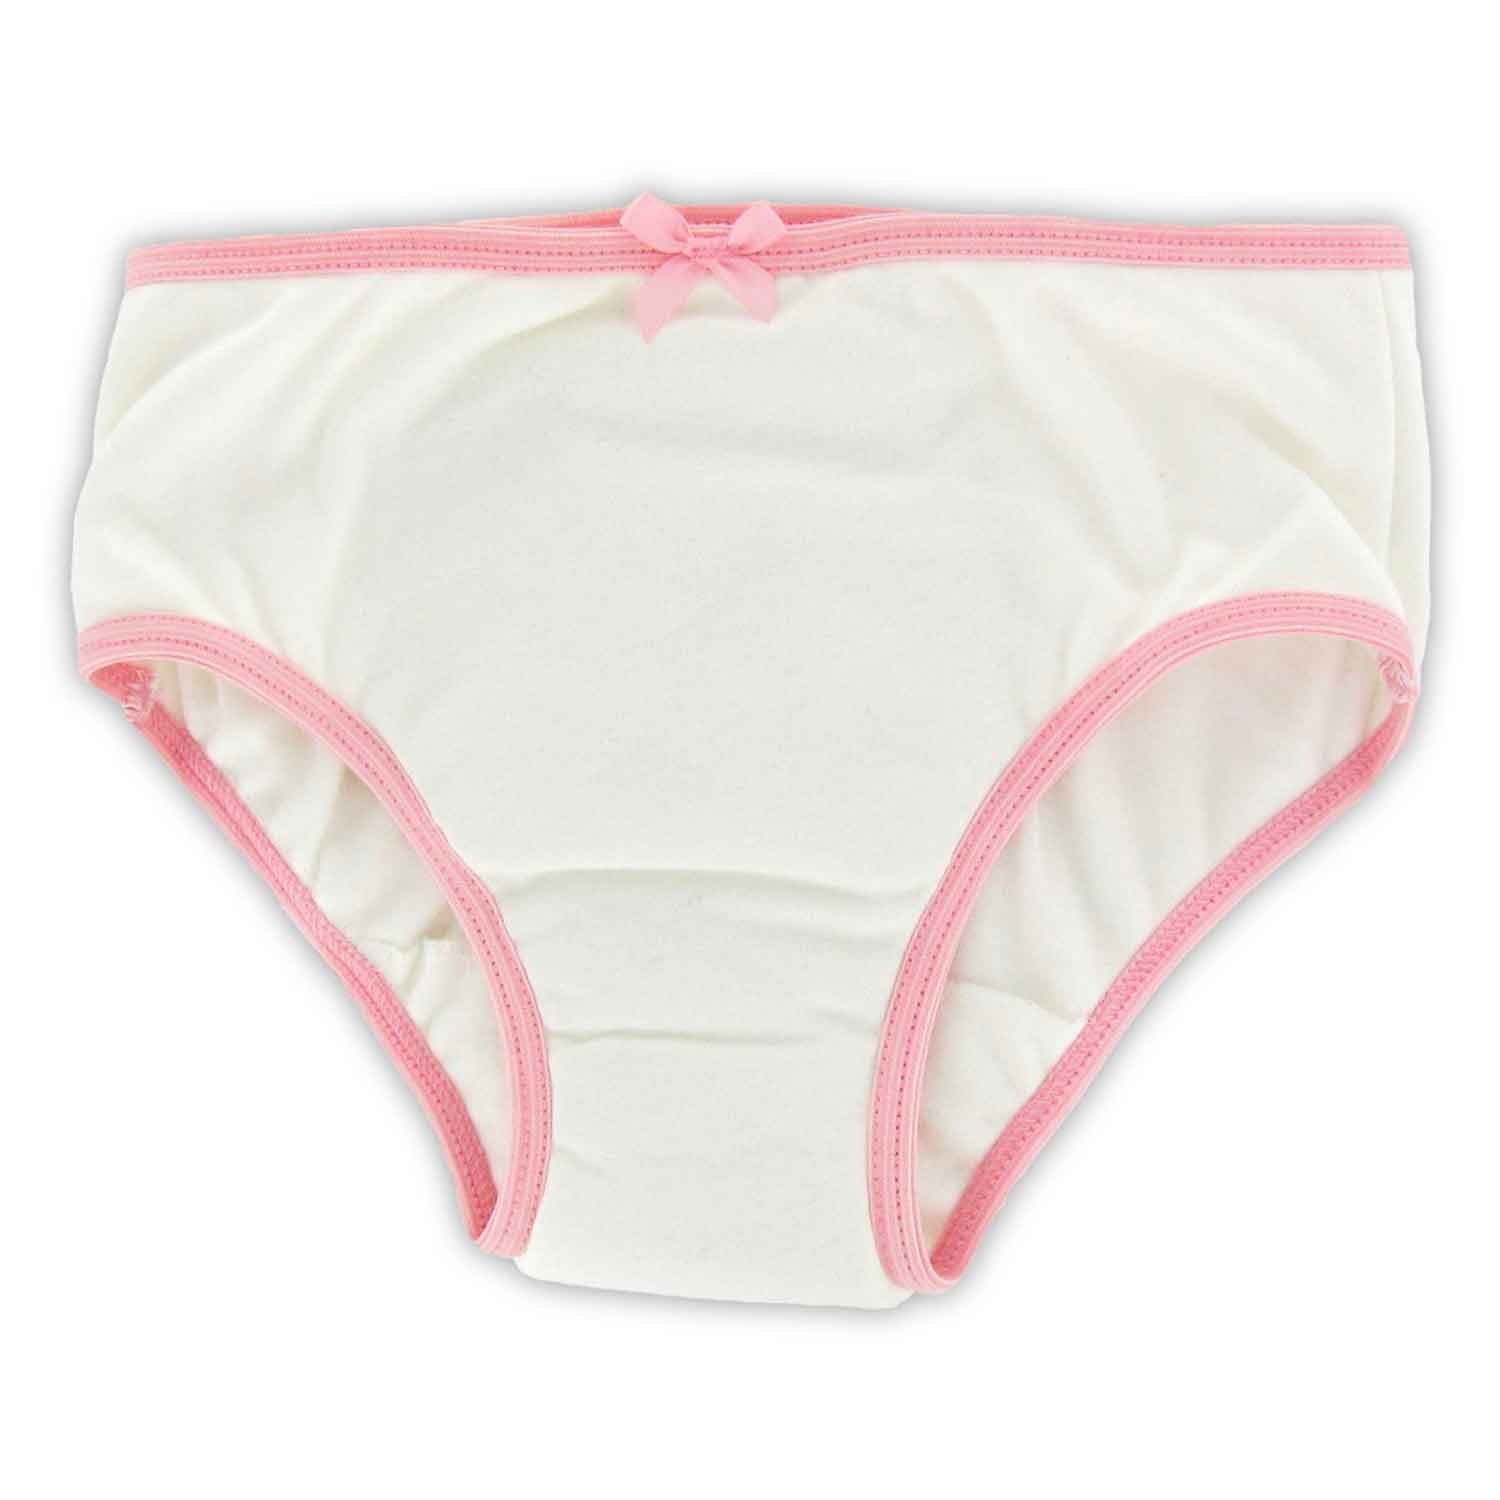 TENA Silhouette Washable Underwear: a roupa interior para a